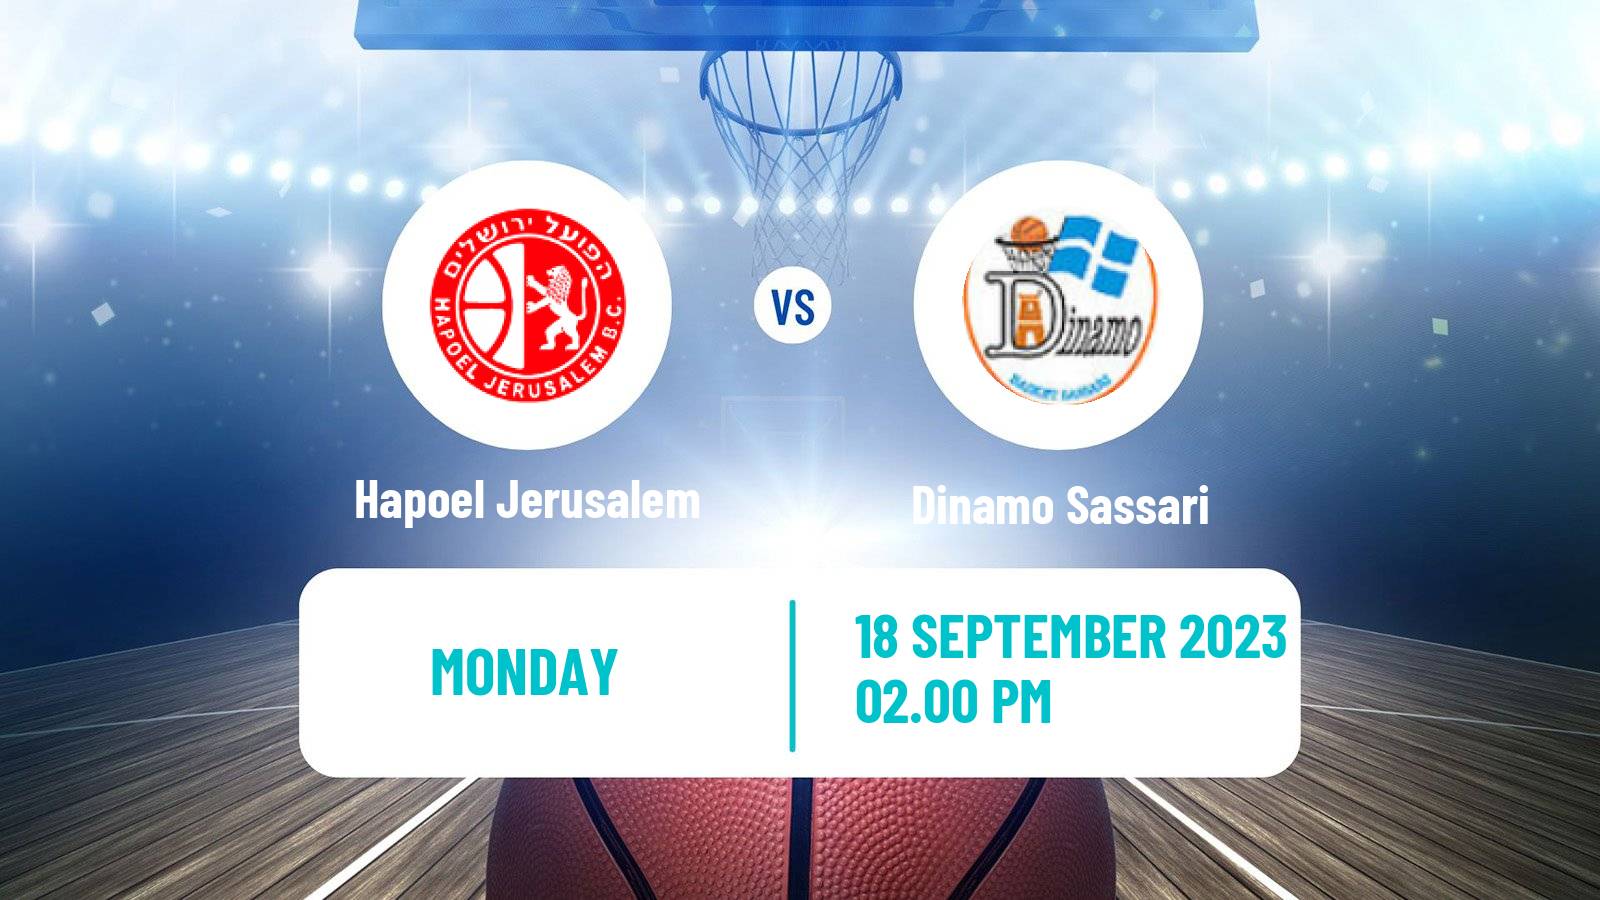 Basketball Club Friendly Basketball Hapoel Jerusalem - Dinamo Sassari